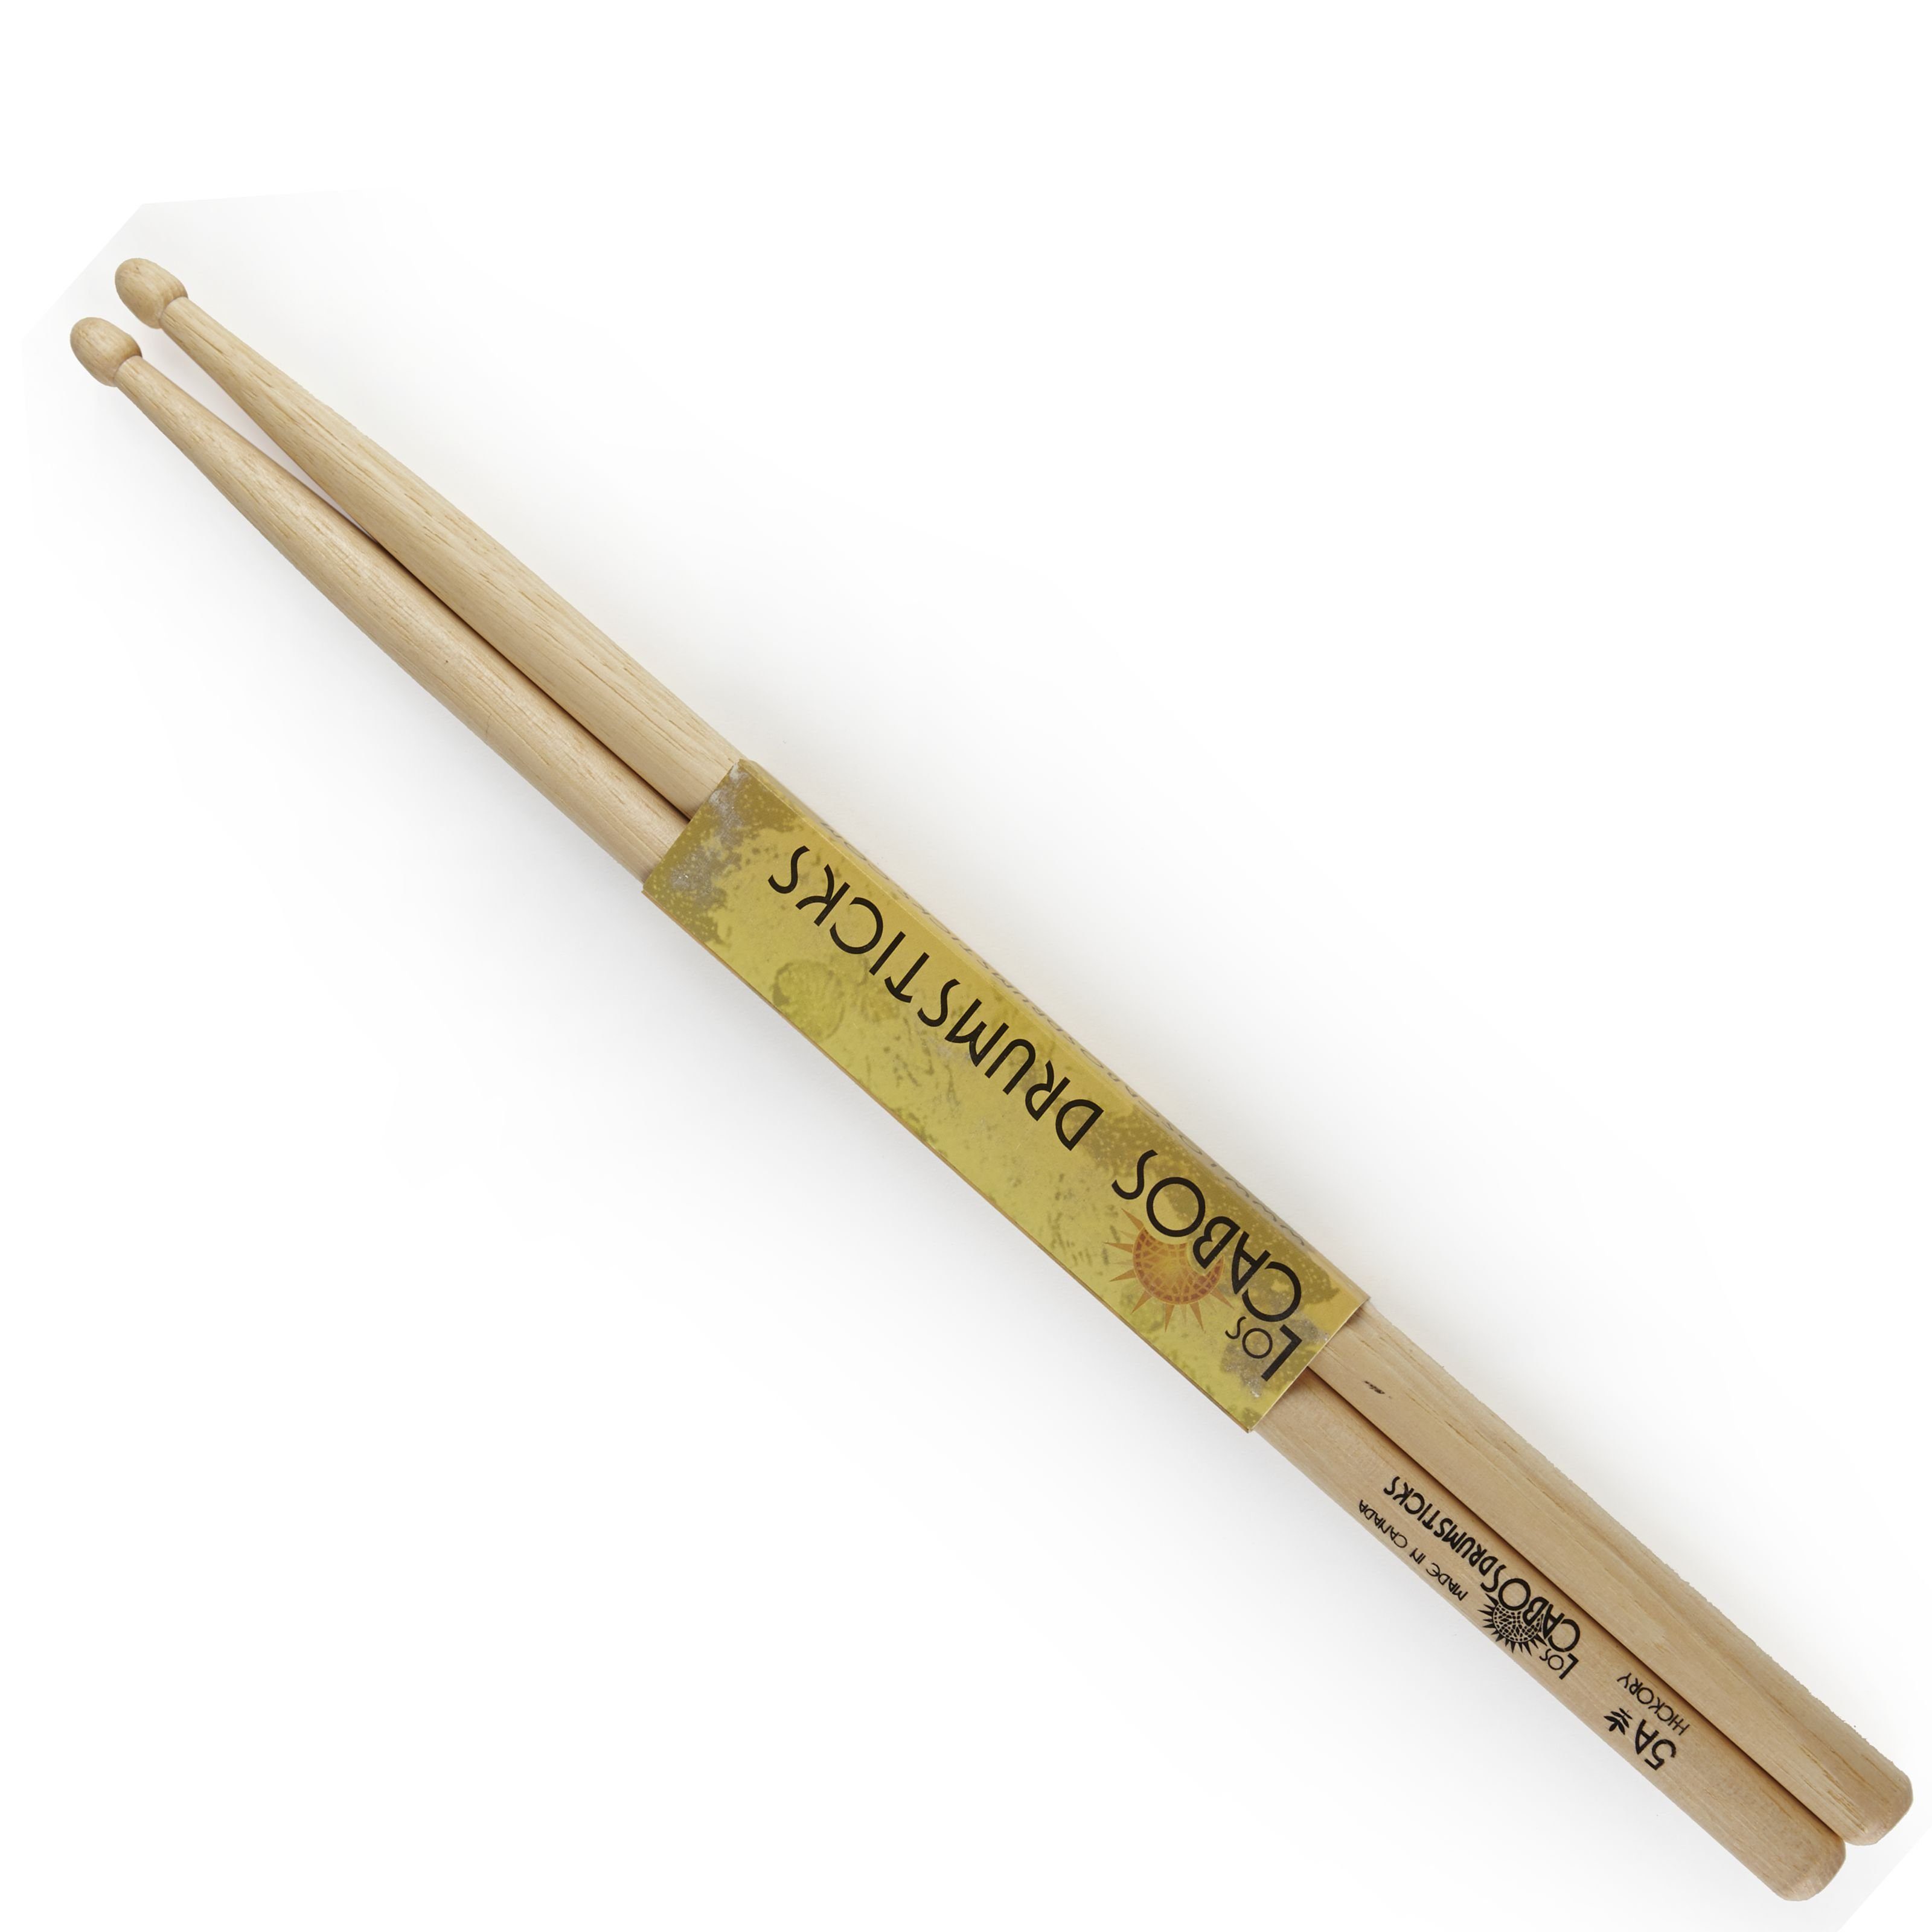 Los Cabos Drumsticks (5A White Hickory Sticks, Wood Tip, Sticks, Beater und Mallets, Drumsticks Holztip), 5A White Hickory Sticks, Wood Tip - Drumsticks